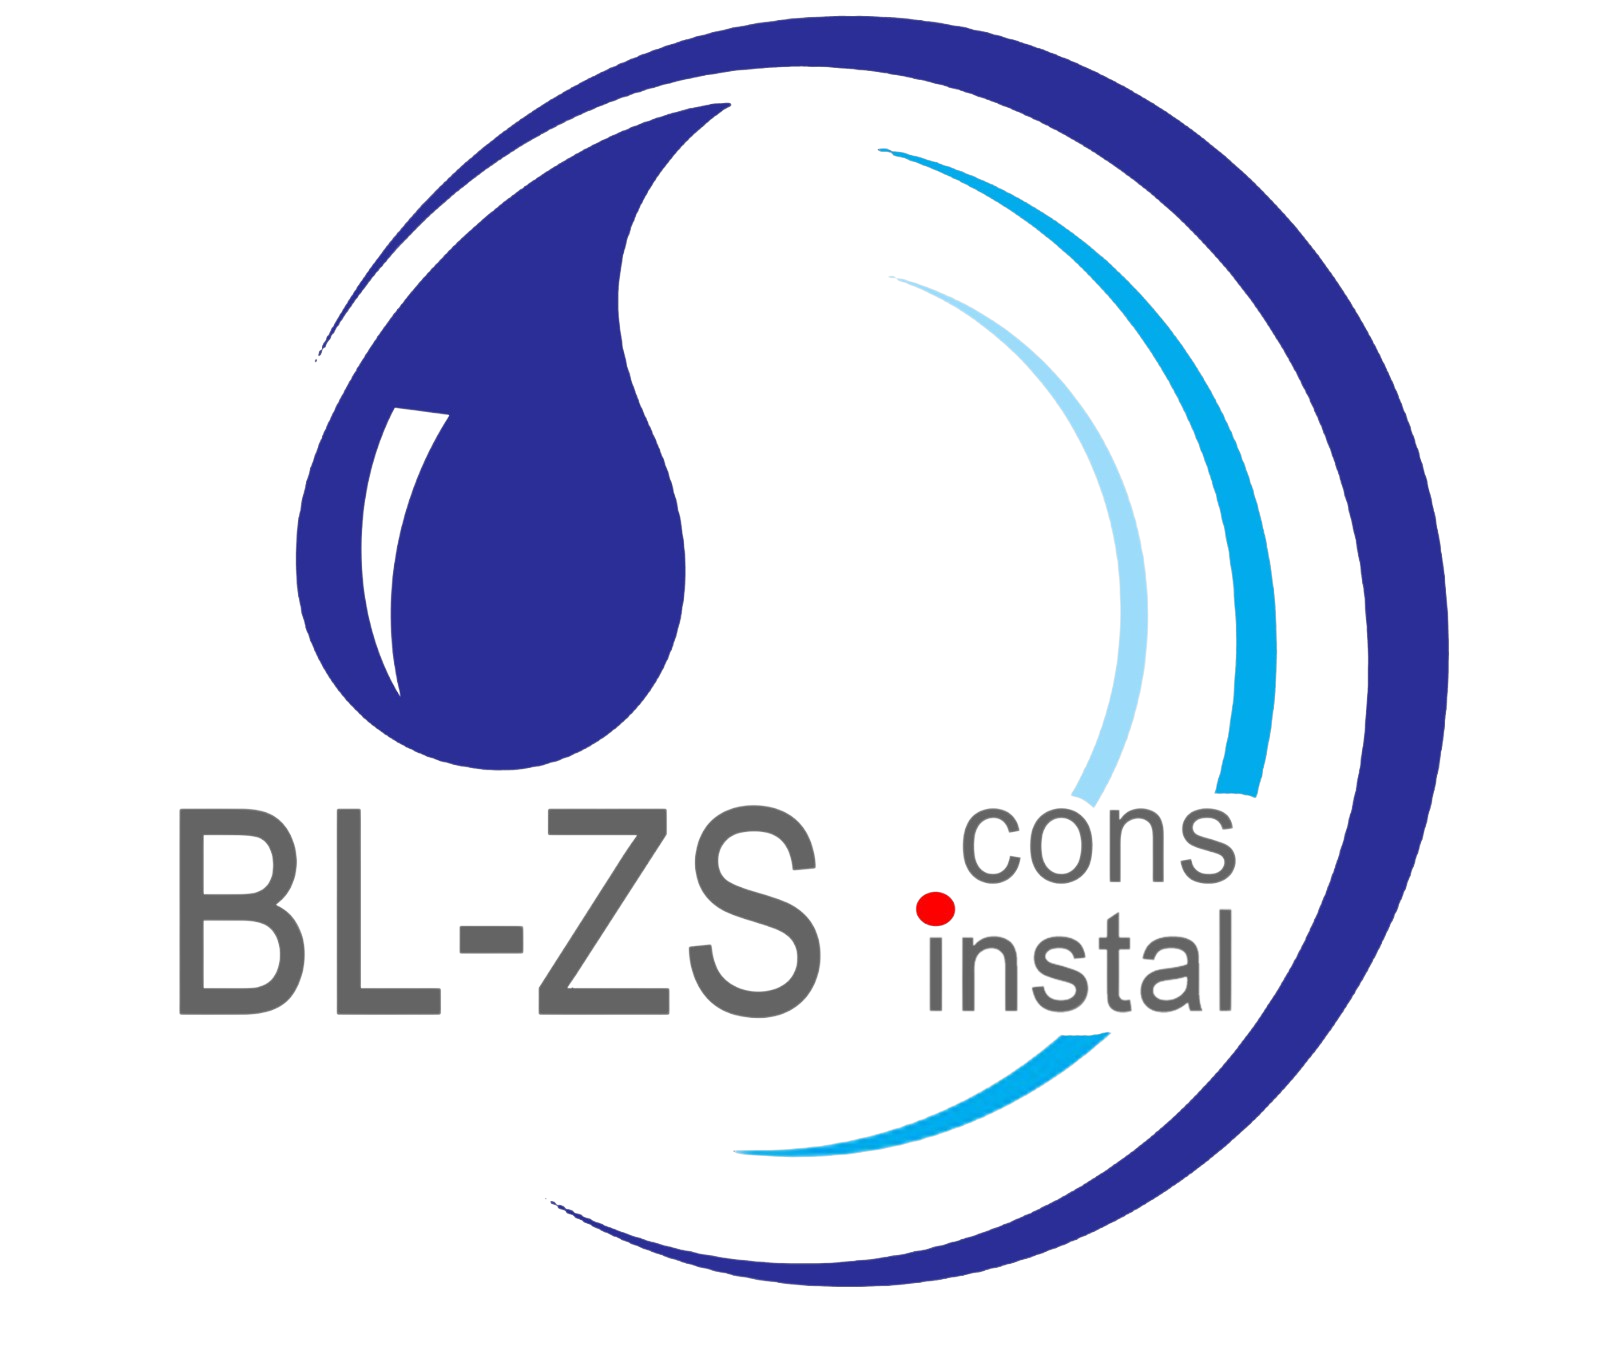 BLZS Cons